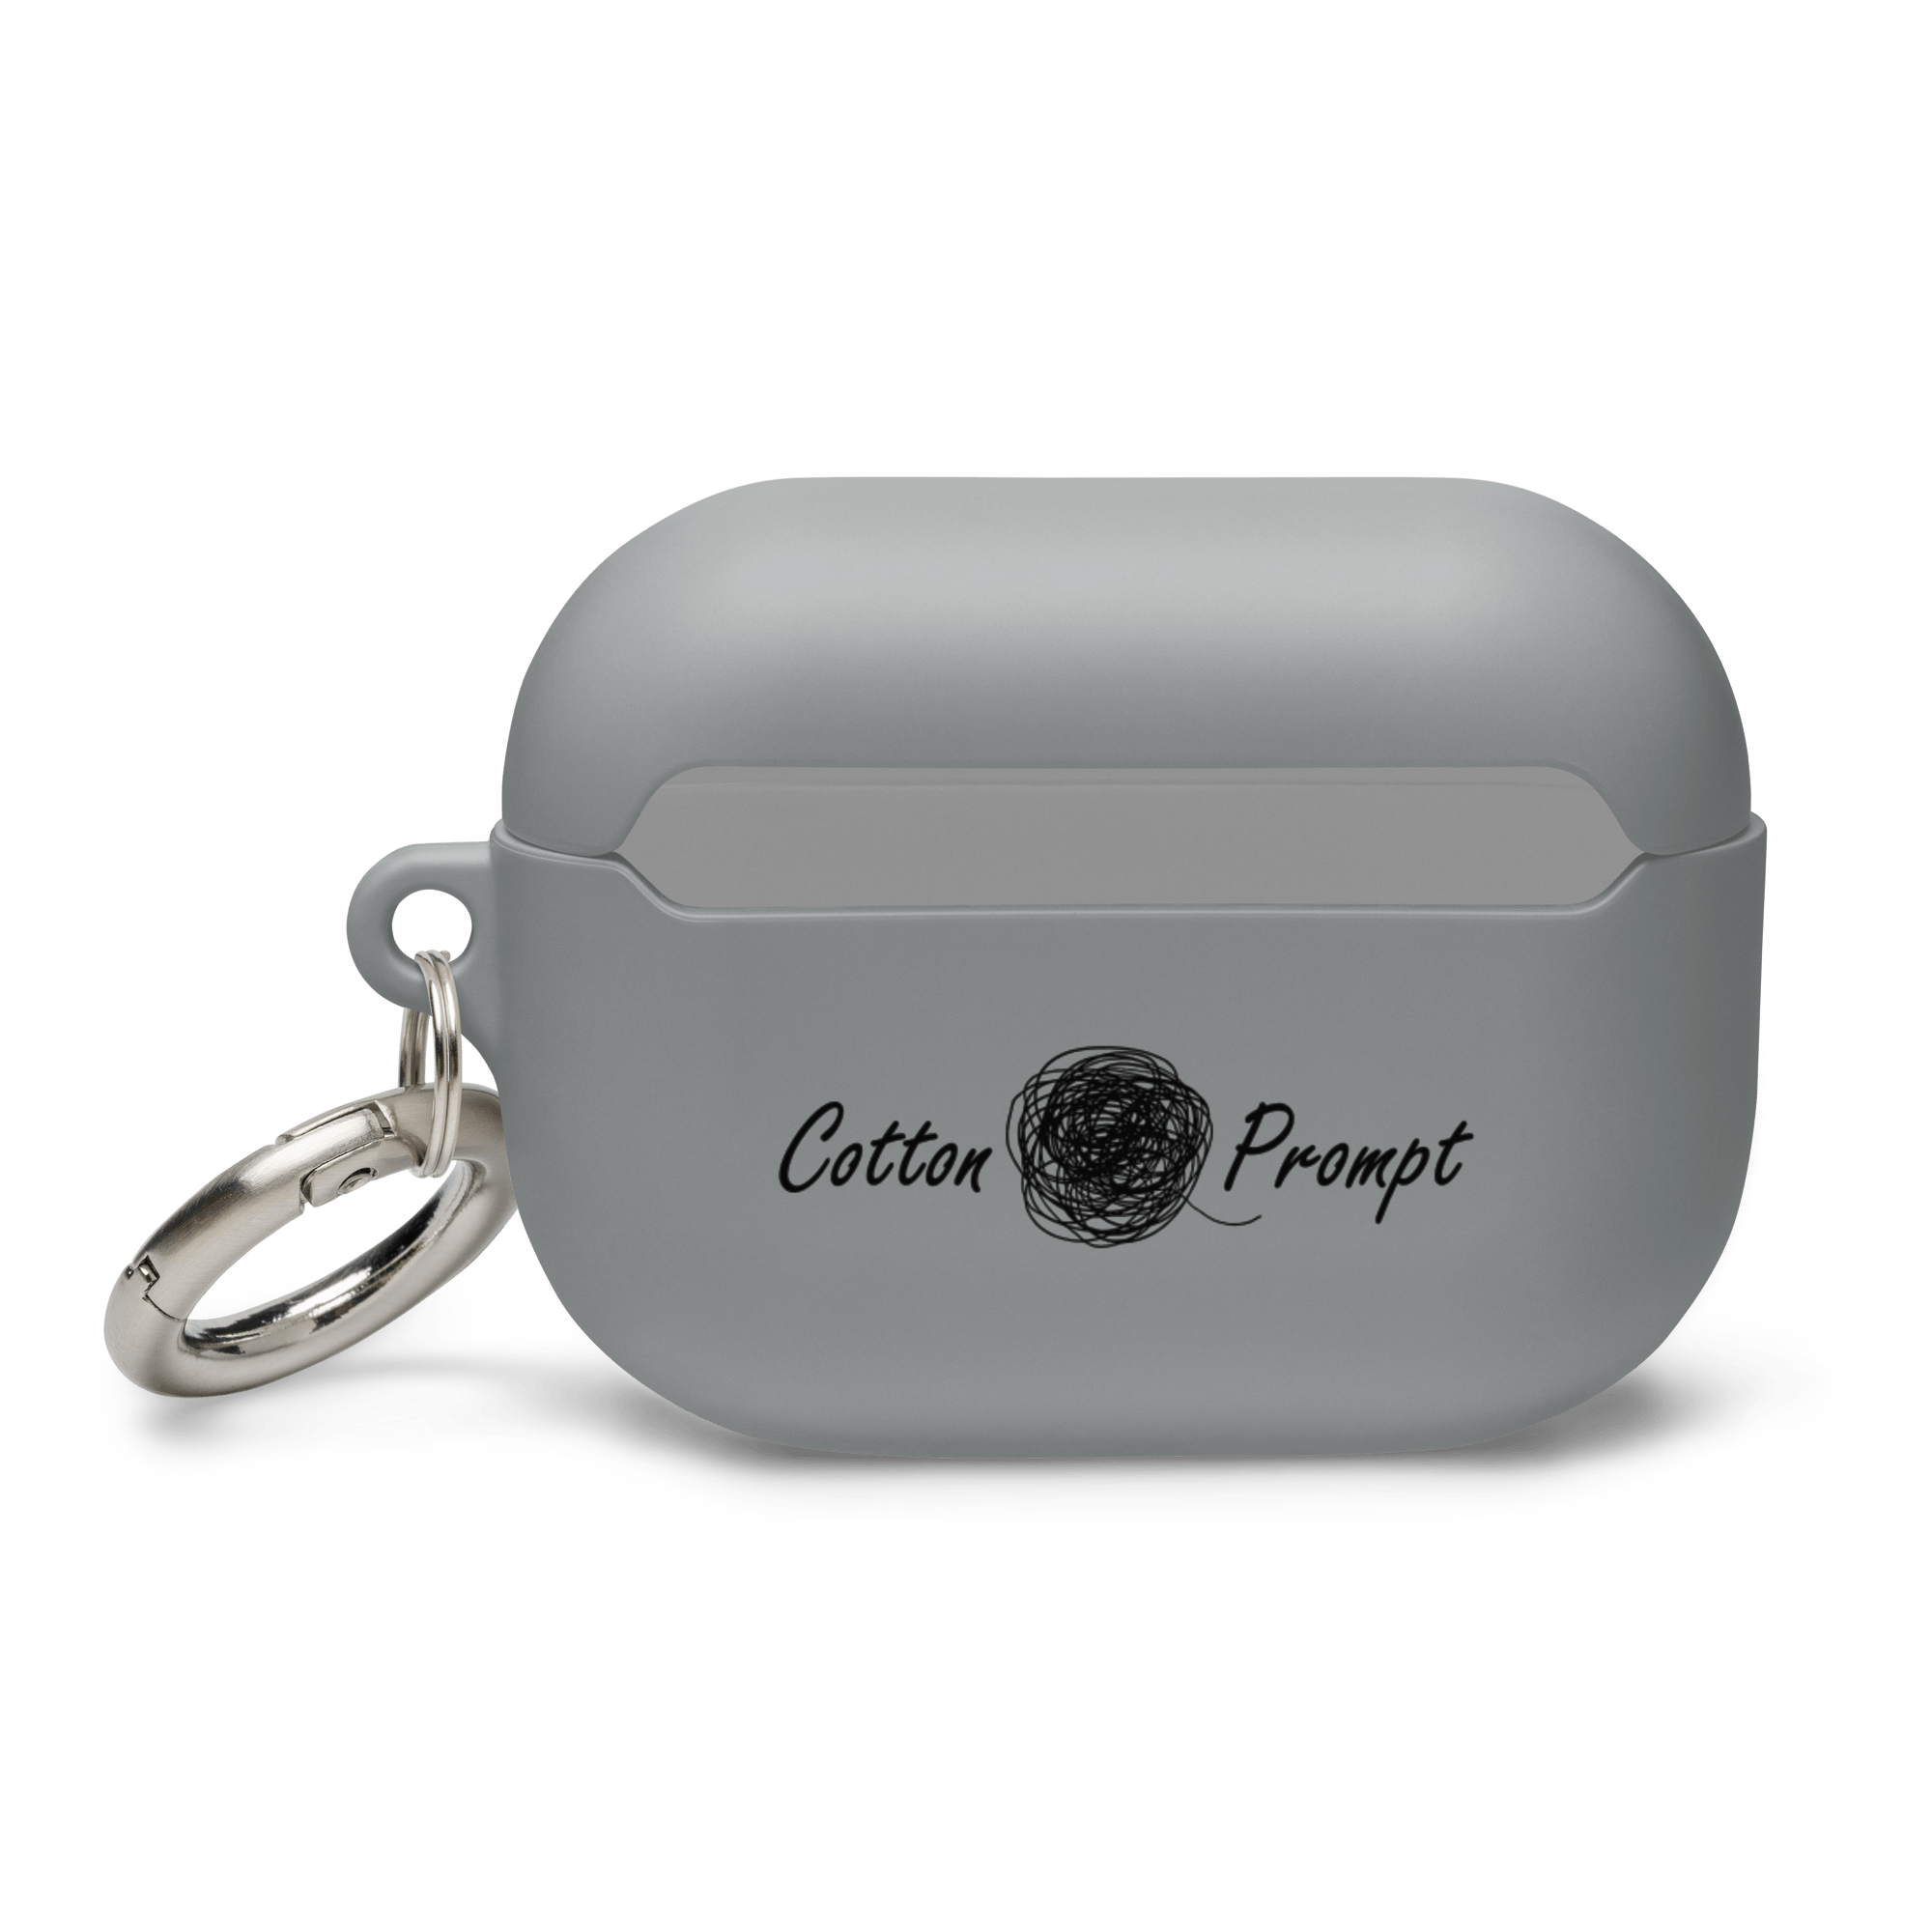 PromptPodCase™ - Custom AirPods Case – Cotton Prompt